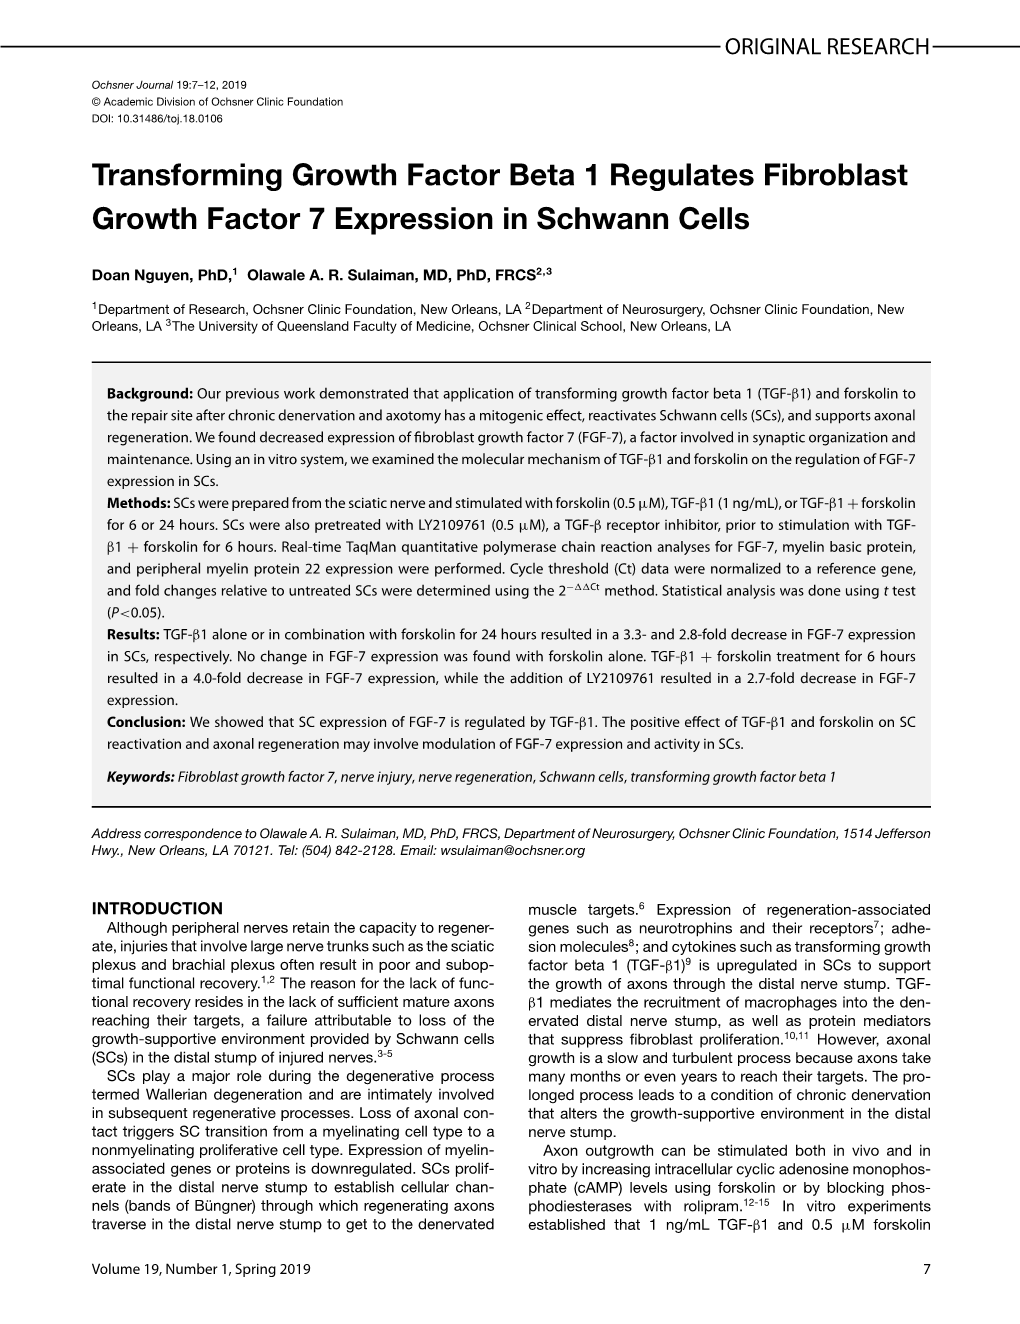 Transforming Growth Factor Beta 1 Regulates Fibroblast Growth Factor 7 Expression in Schwann Cells